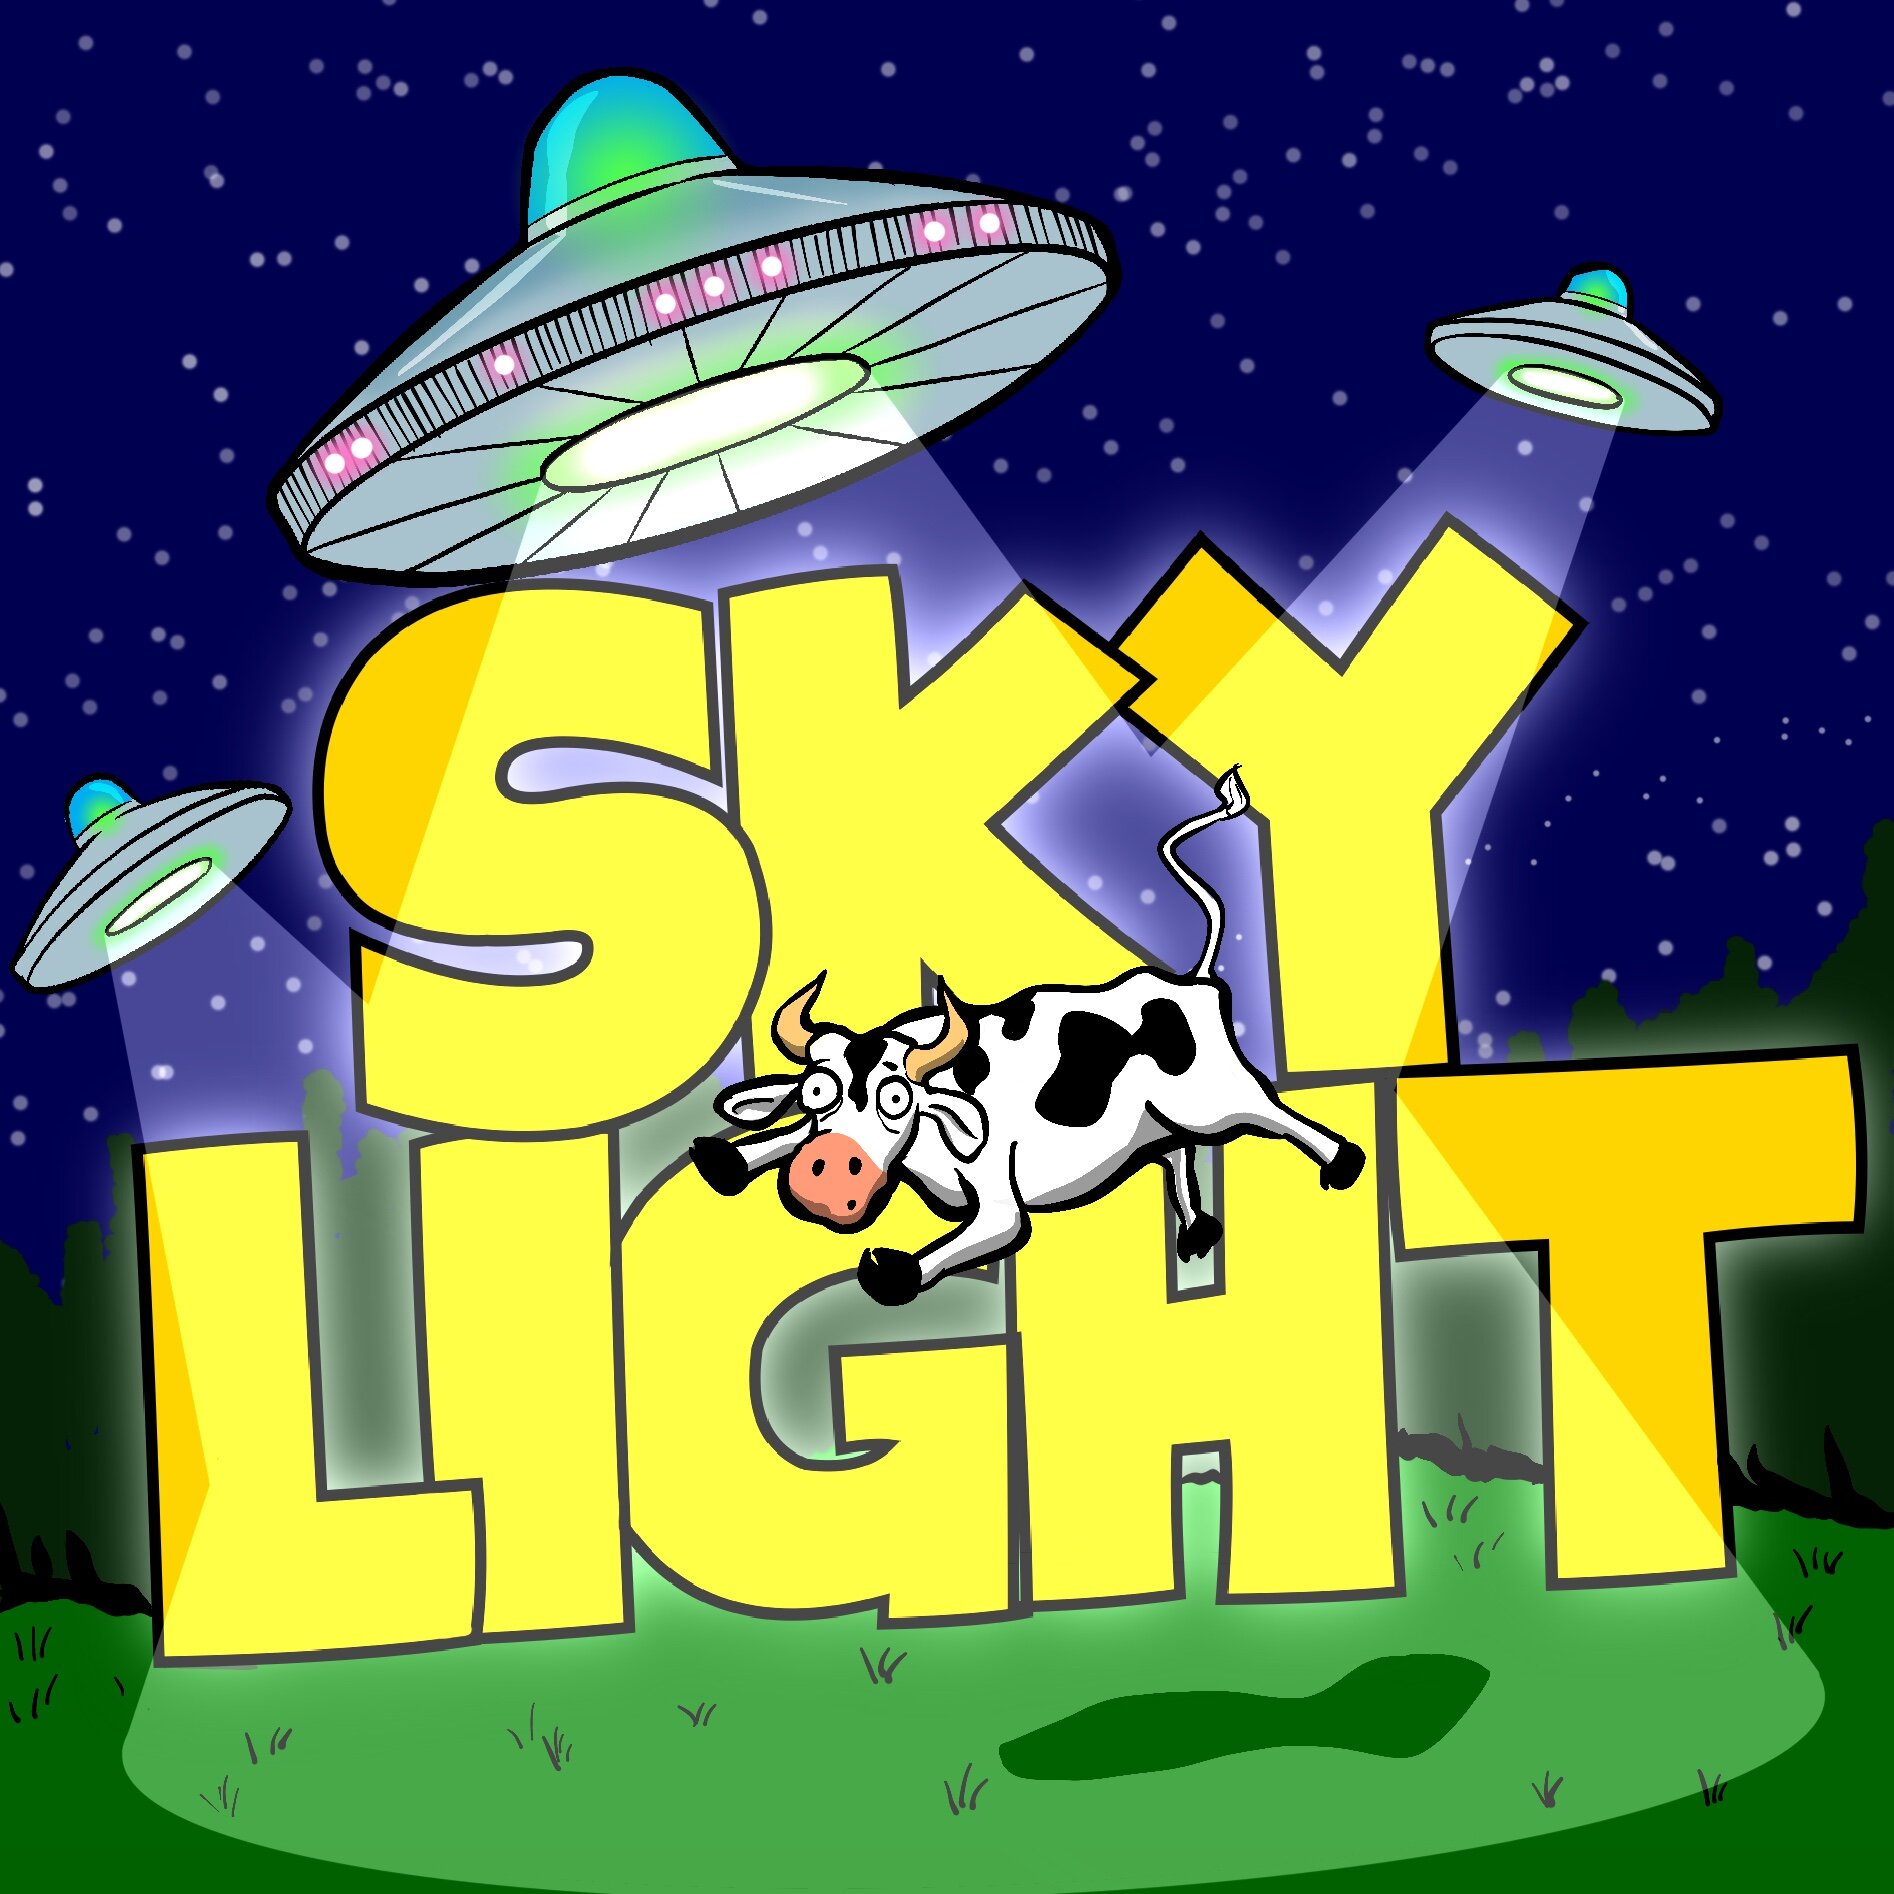 Skylight1.jpg